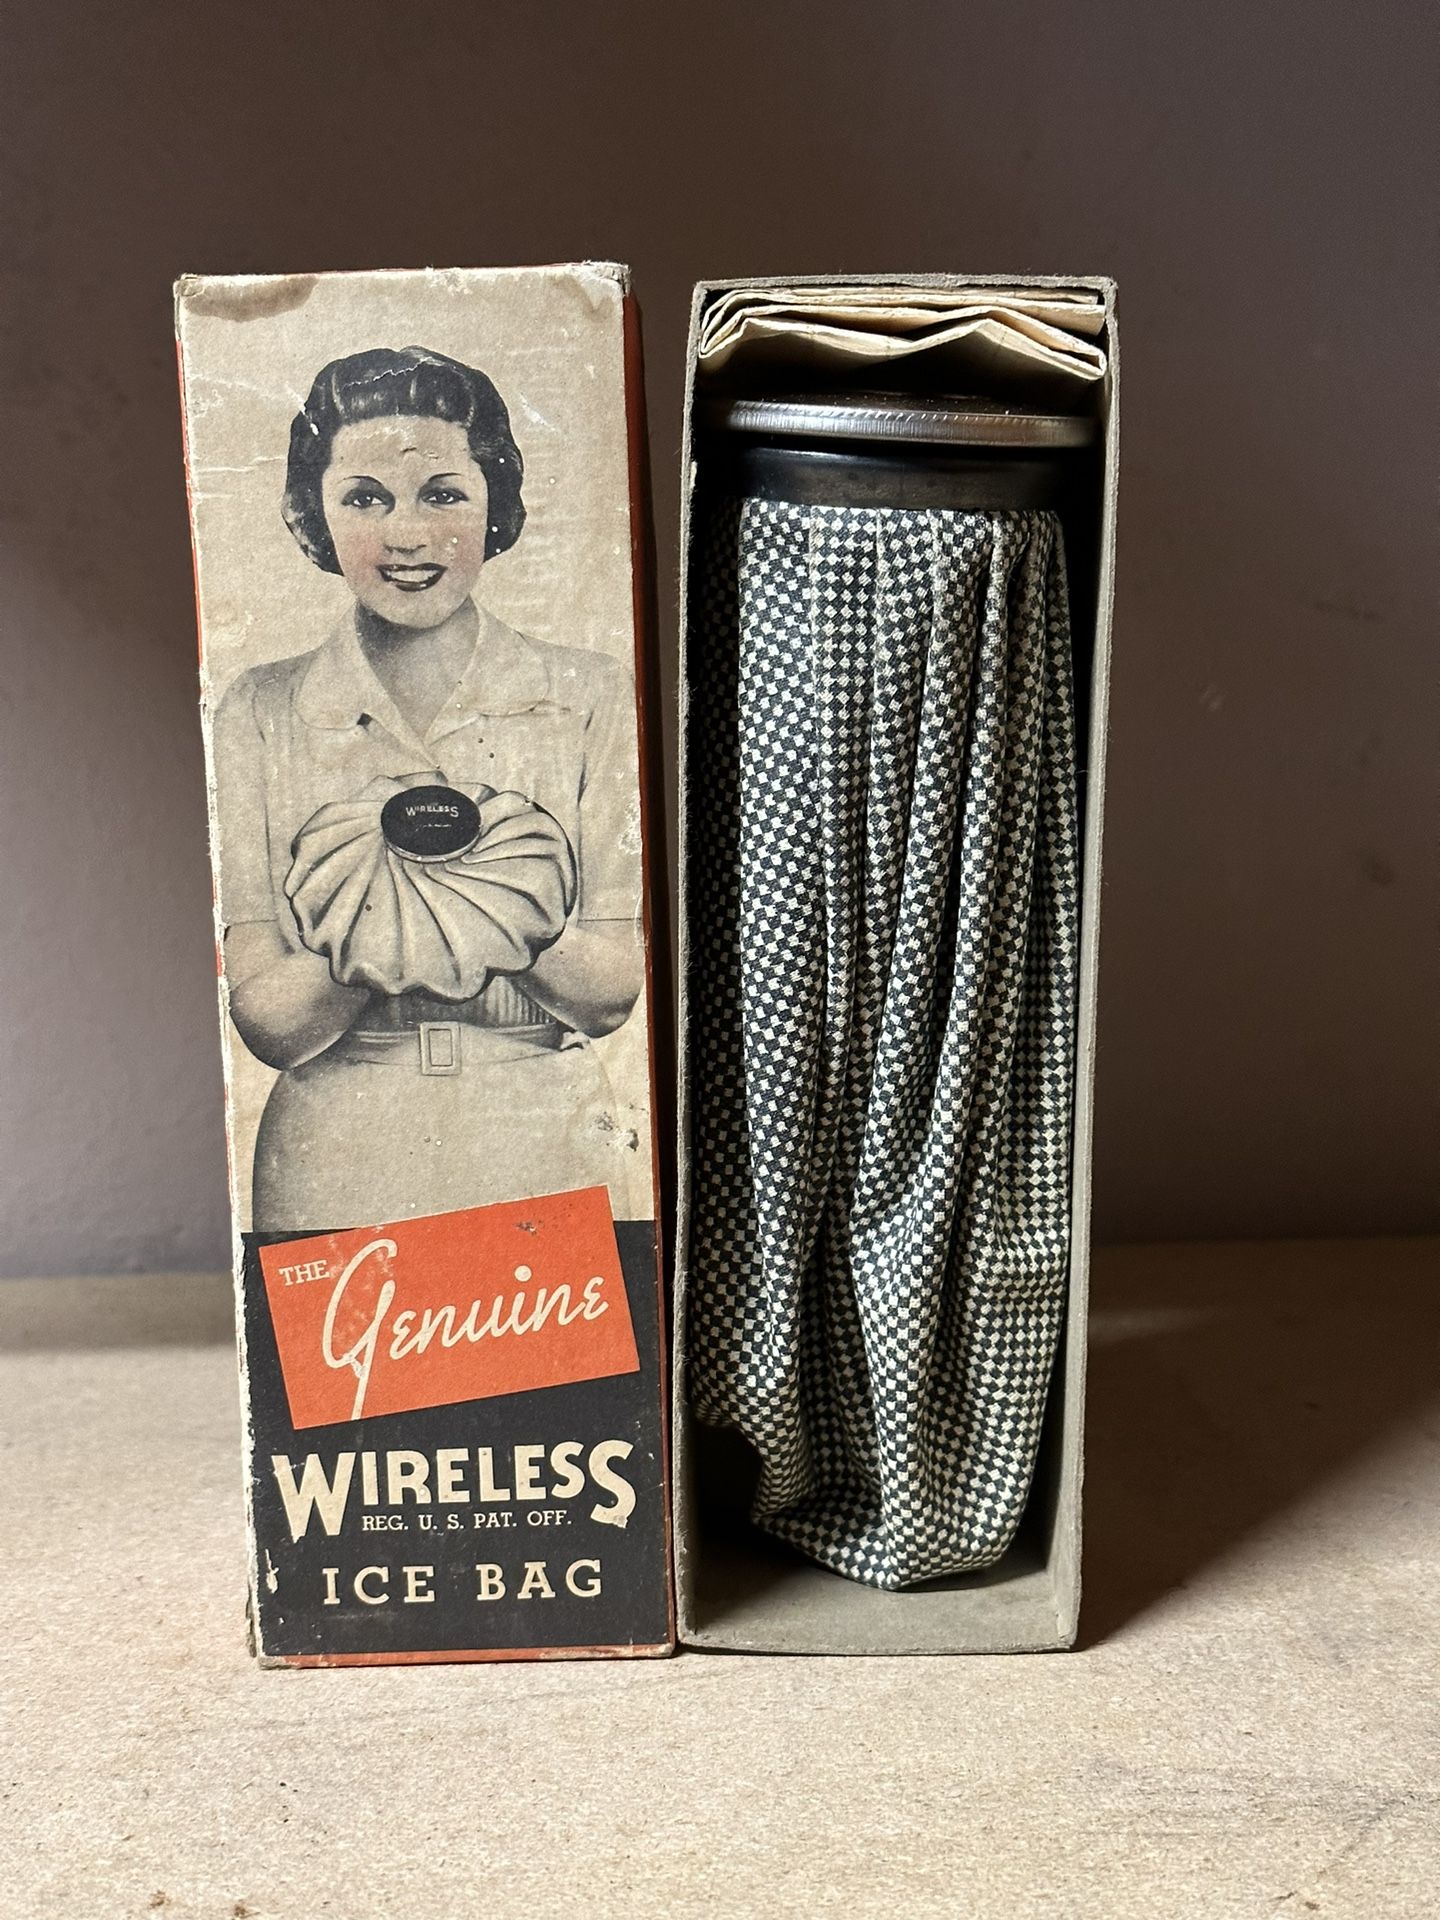 Vintage 1930s The Genuine Wireless Ice Bag Pharmacy Medical Size 9 Lobl Mfg Co